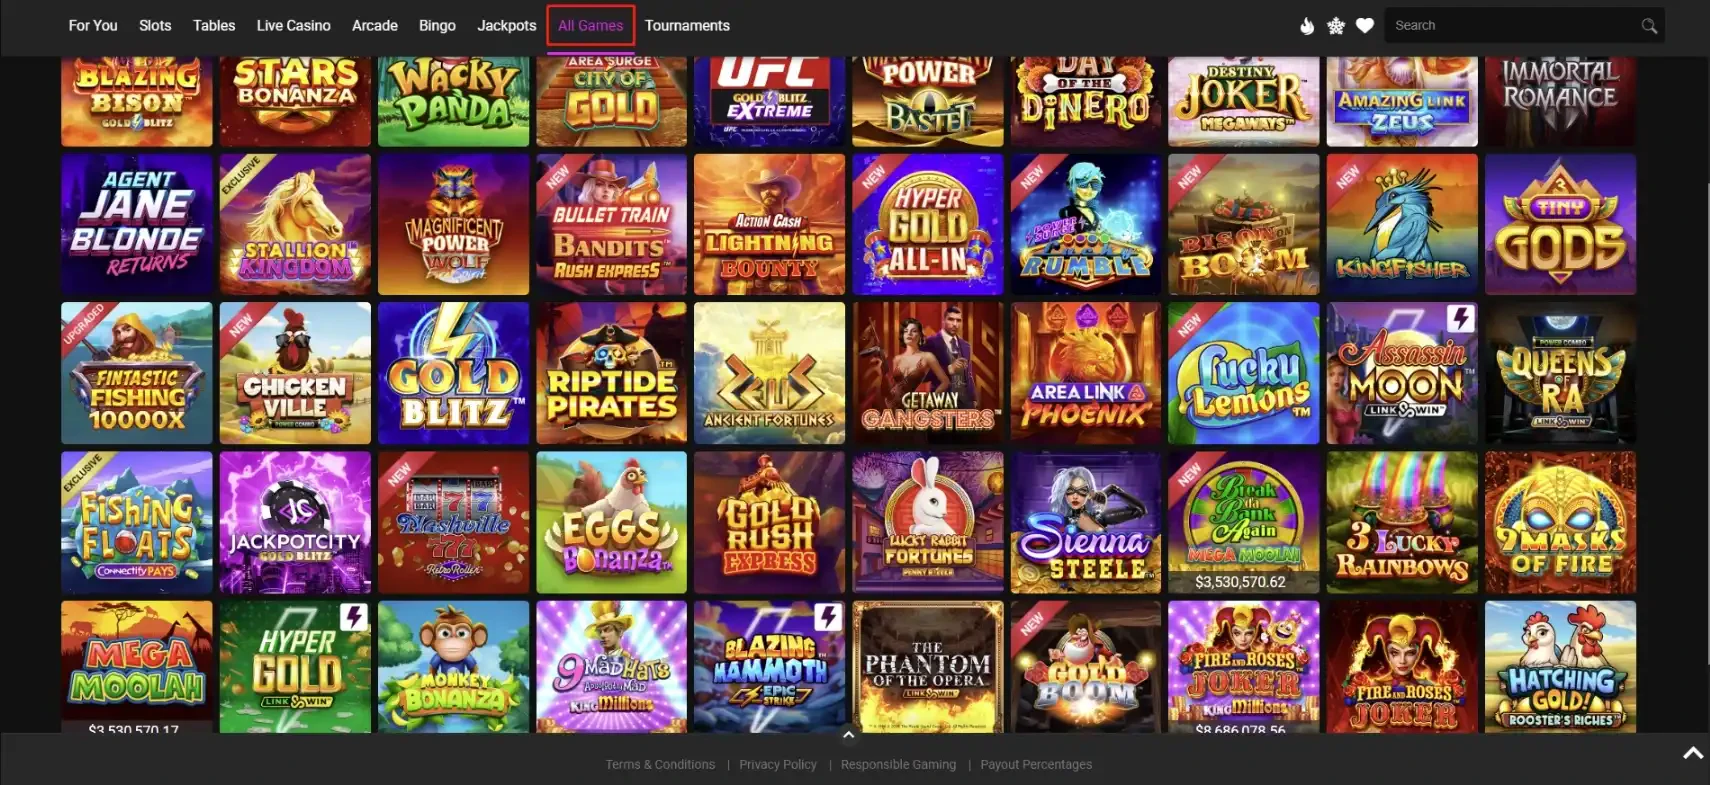 Jackpot City Casino mobile app